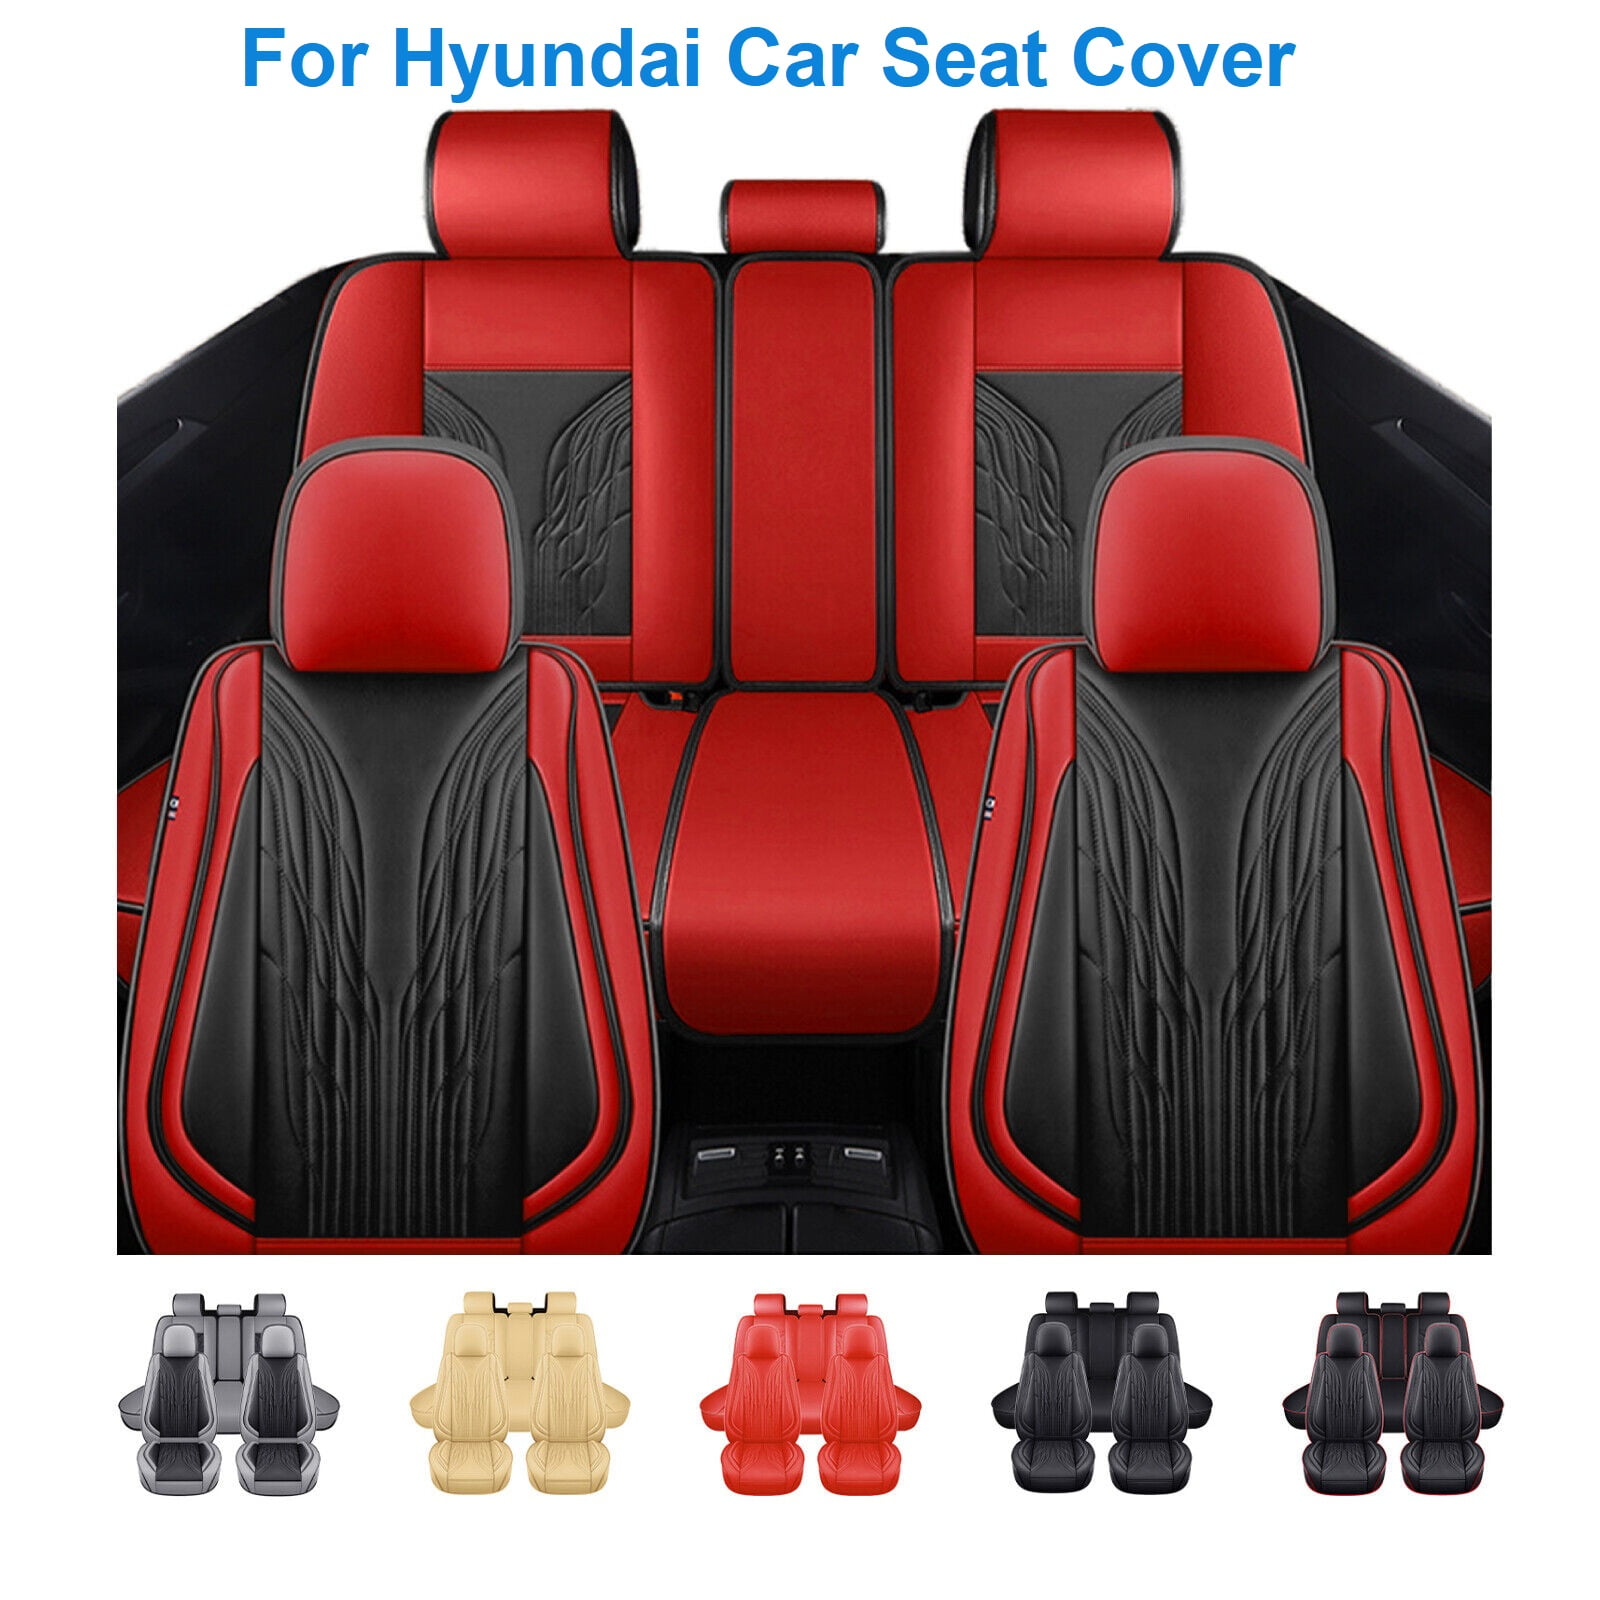 For Hyundai Car Seat Covers 5 Seats Full Set, Premium Pu Leather